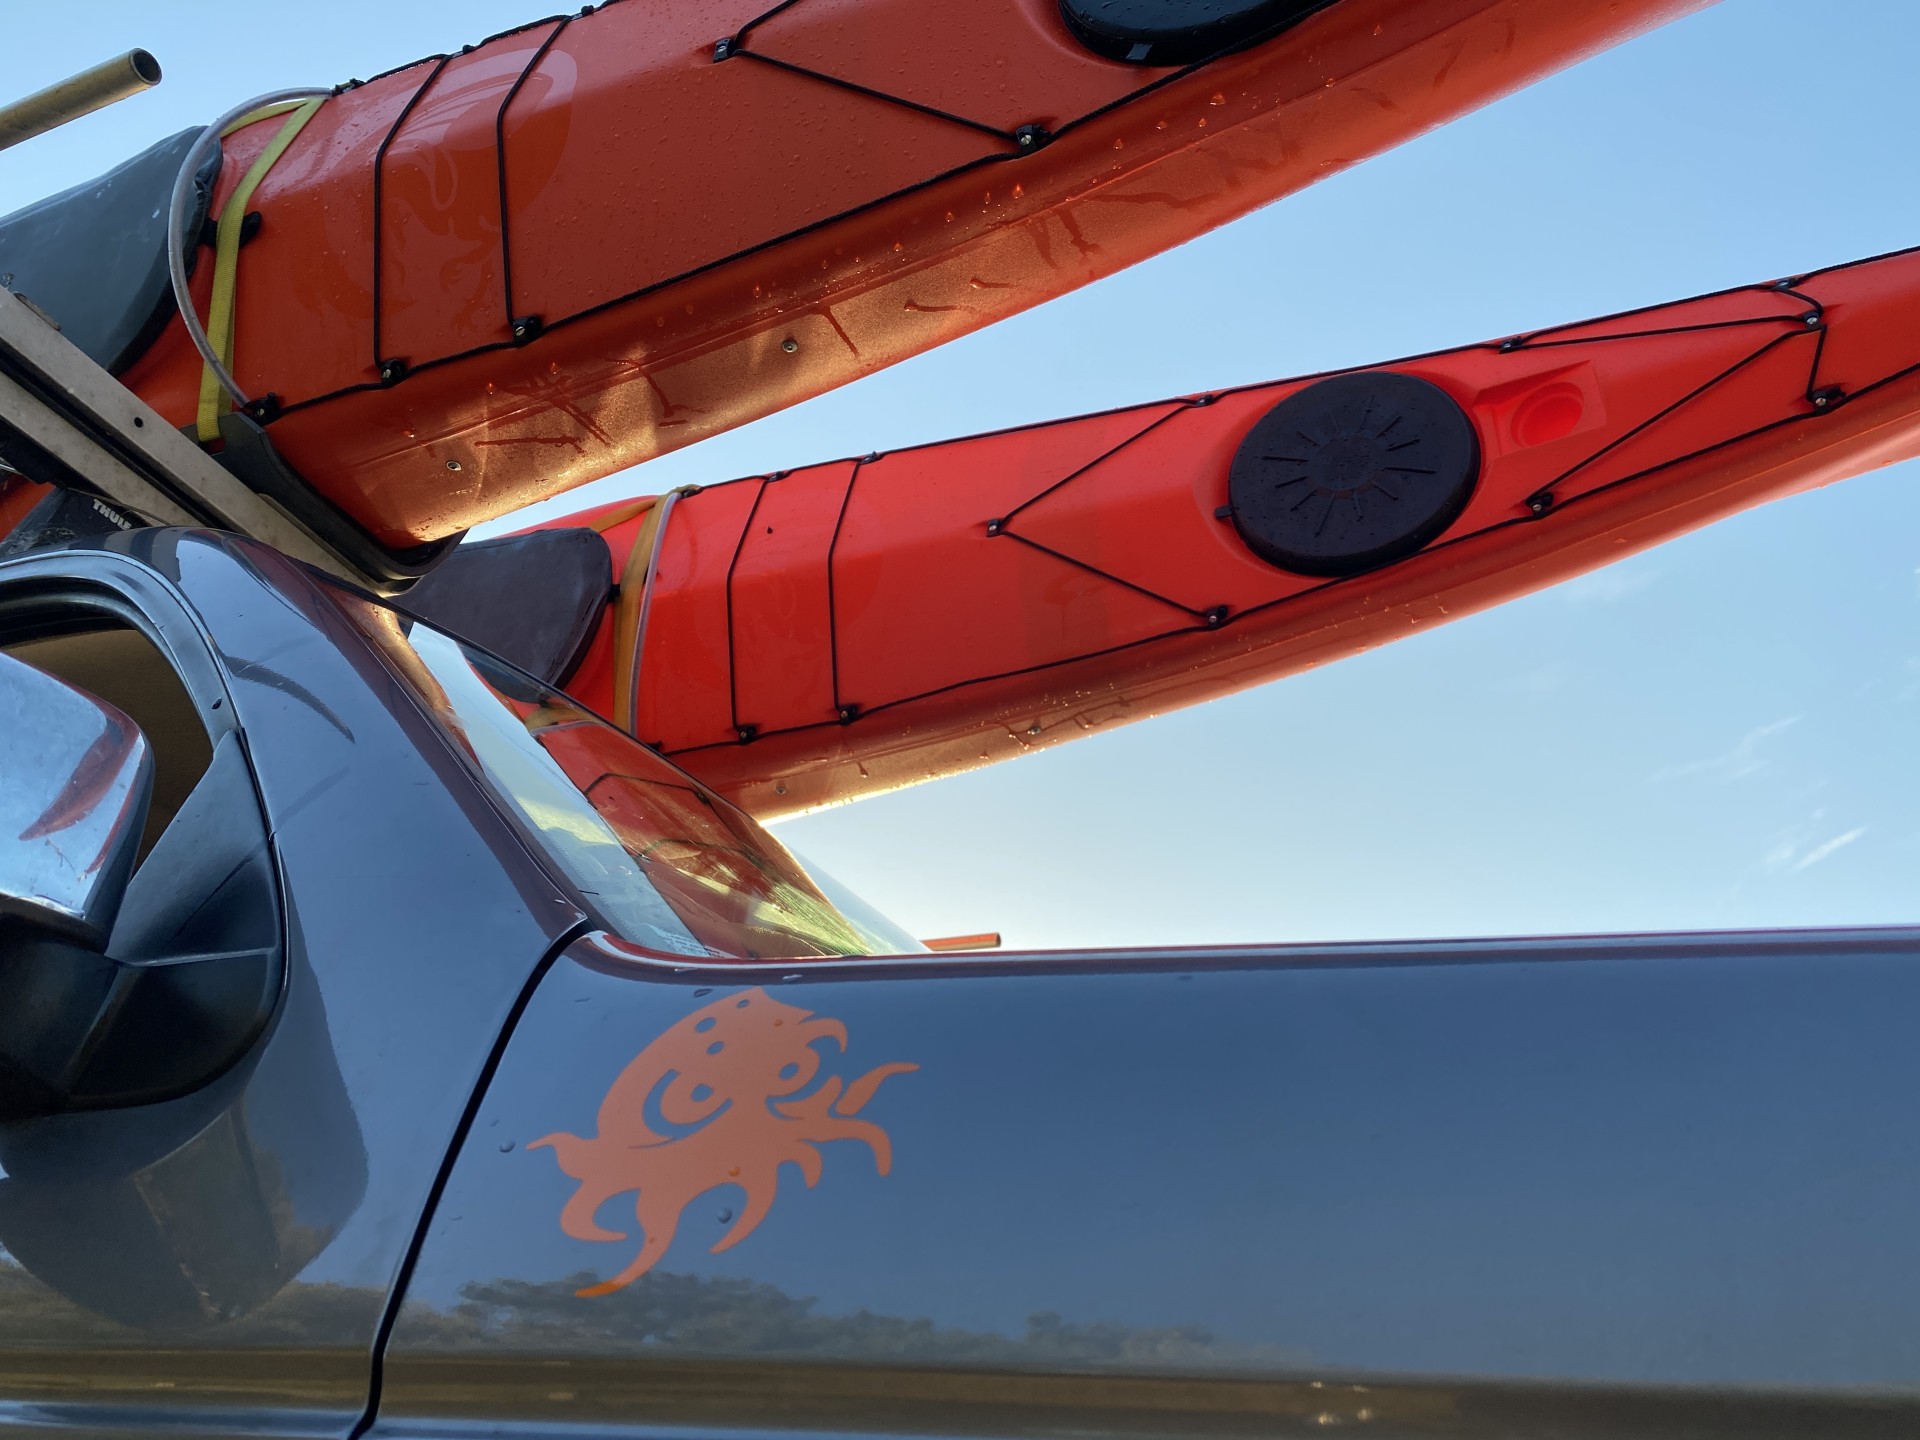 Orange NDK sea kayaks on a vehicle with NOMAD Sea Kayaking.